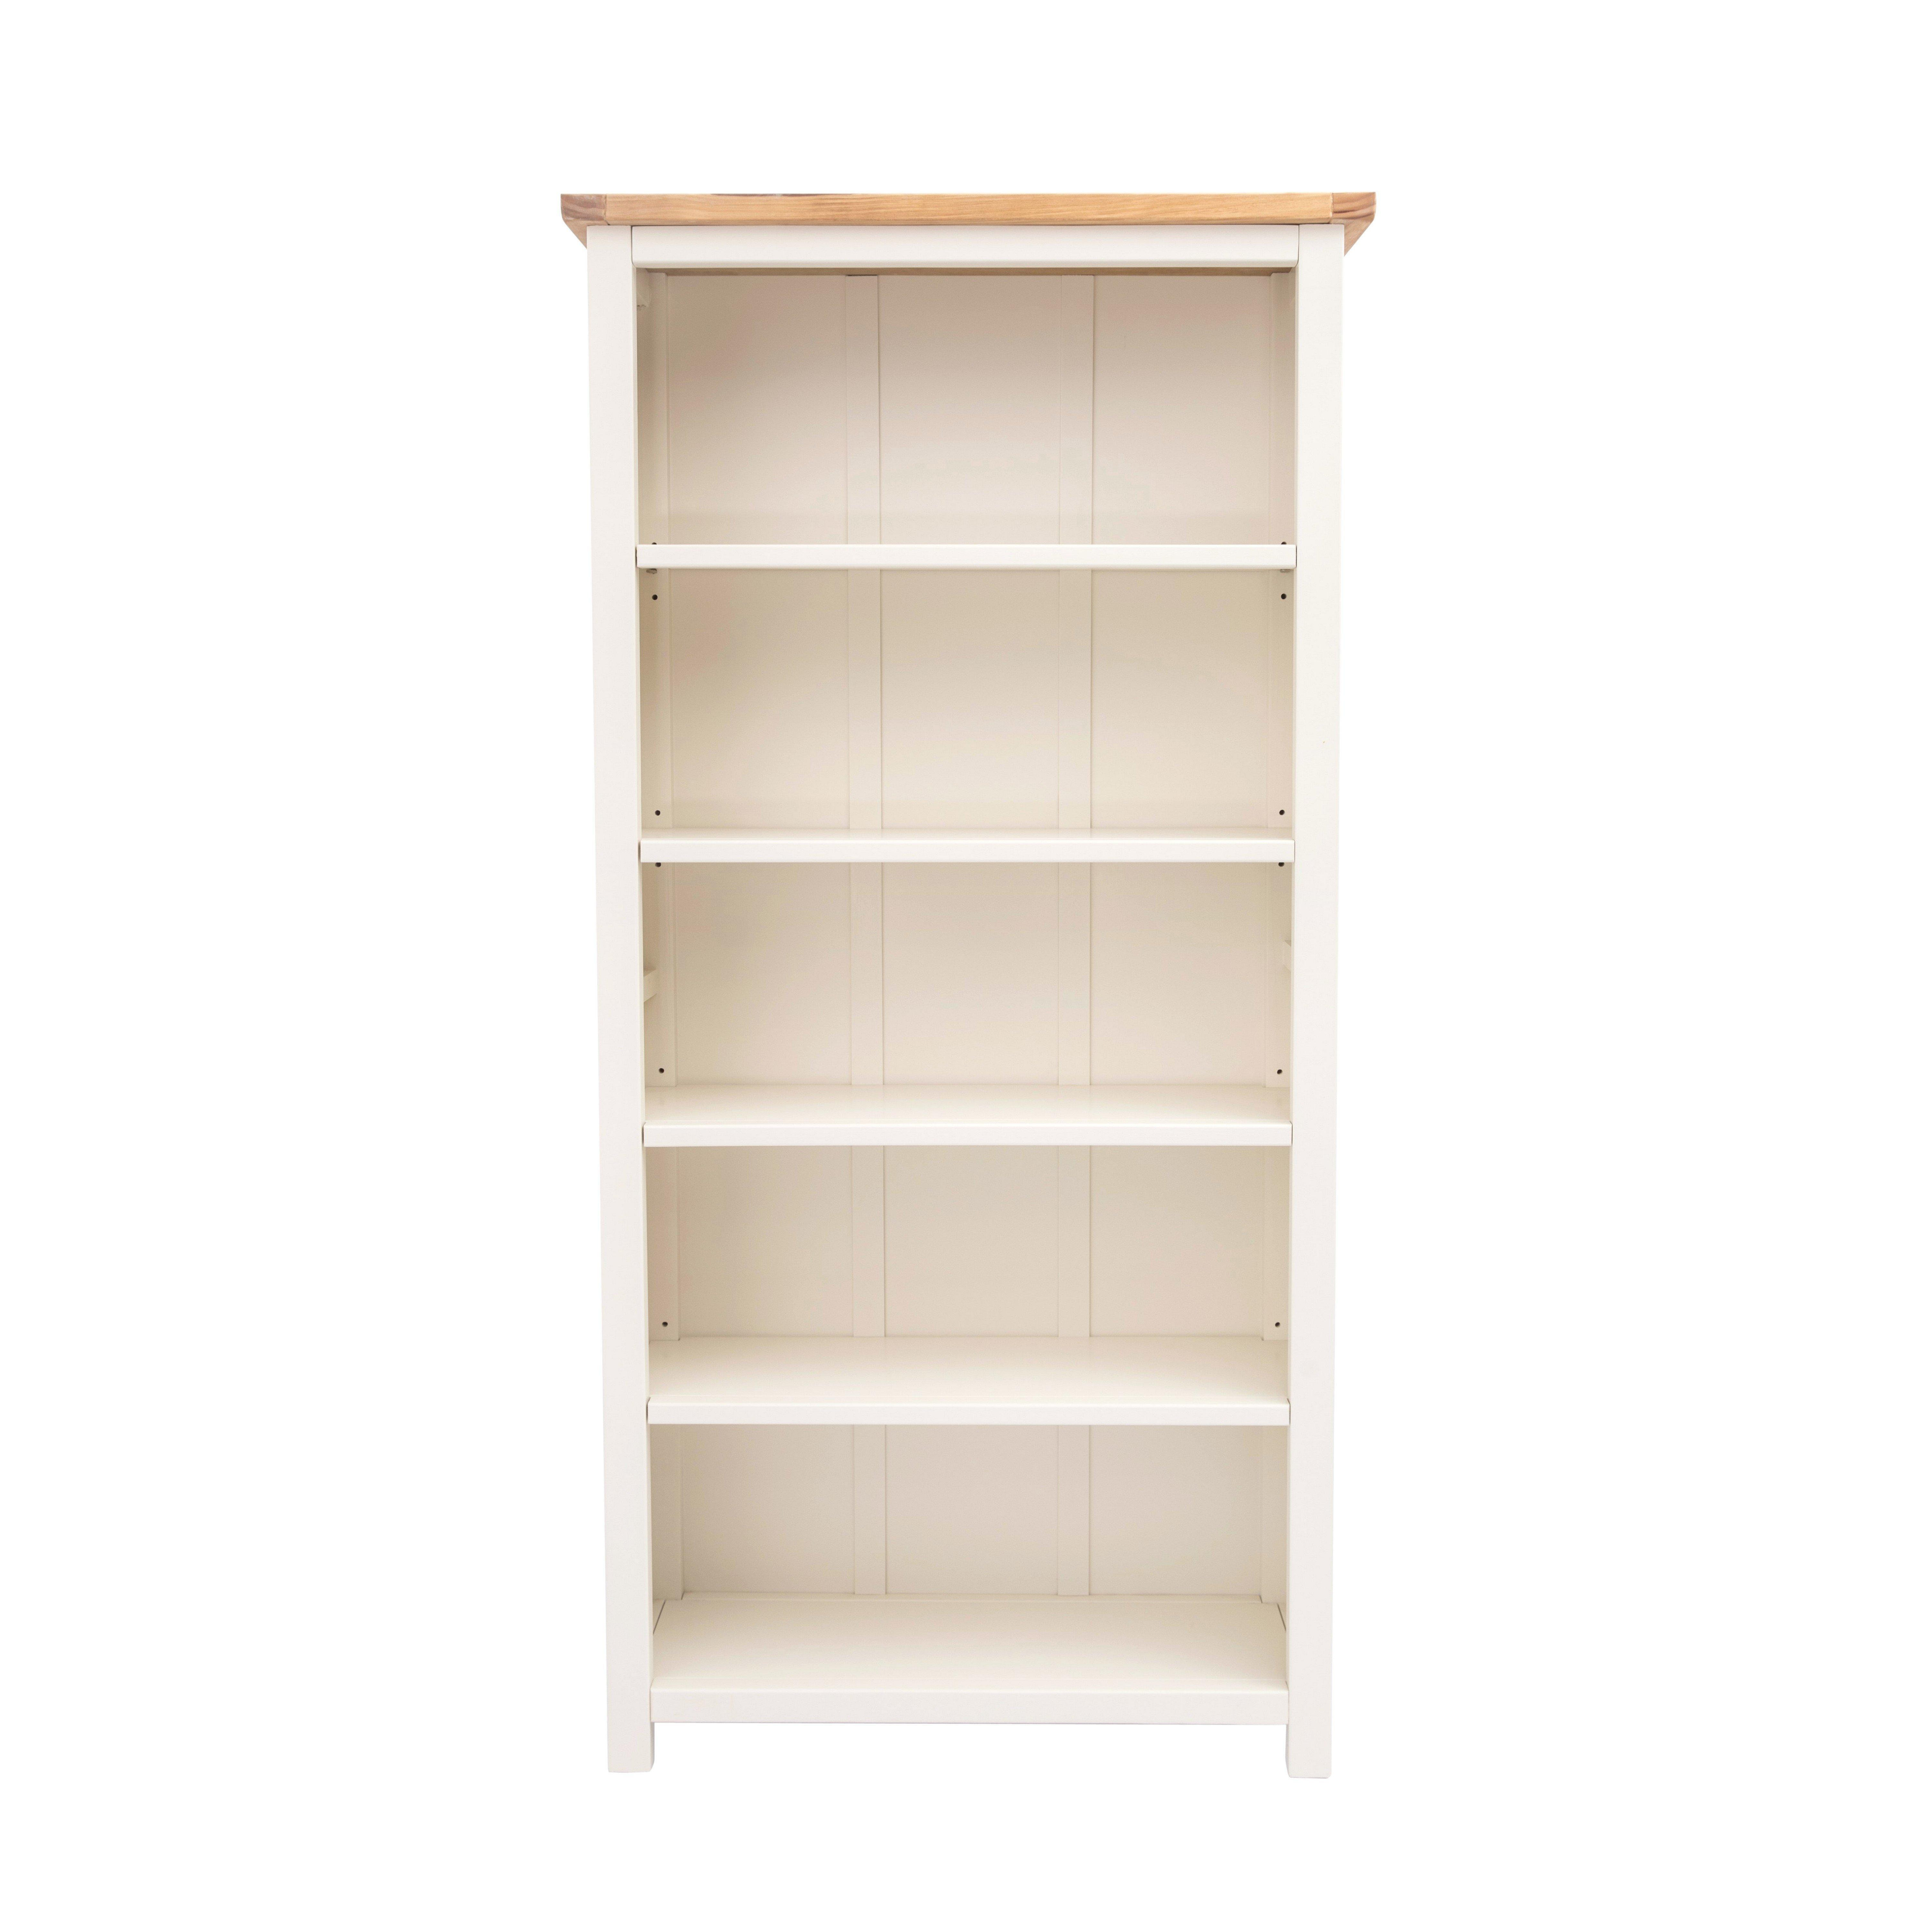 Bookcase 180x90x30cm - image 1